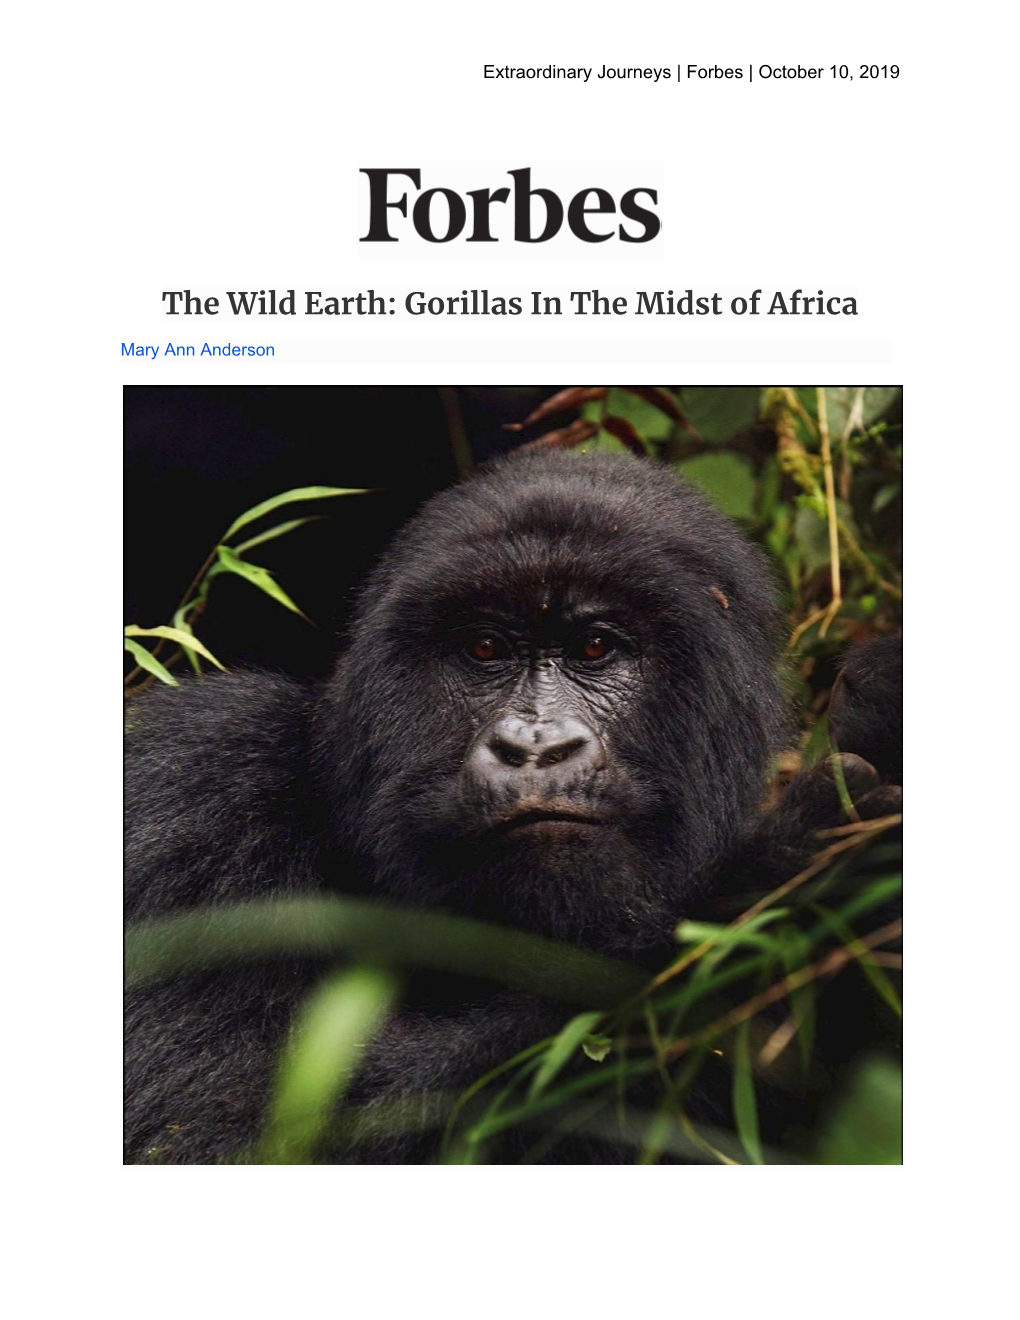 Gorillas in the Midst of Africa